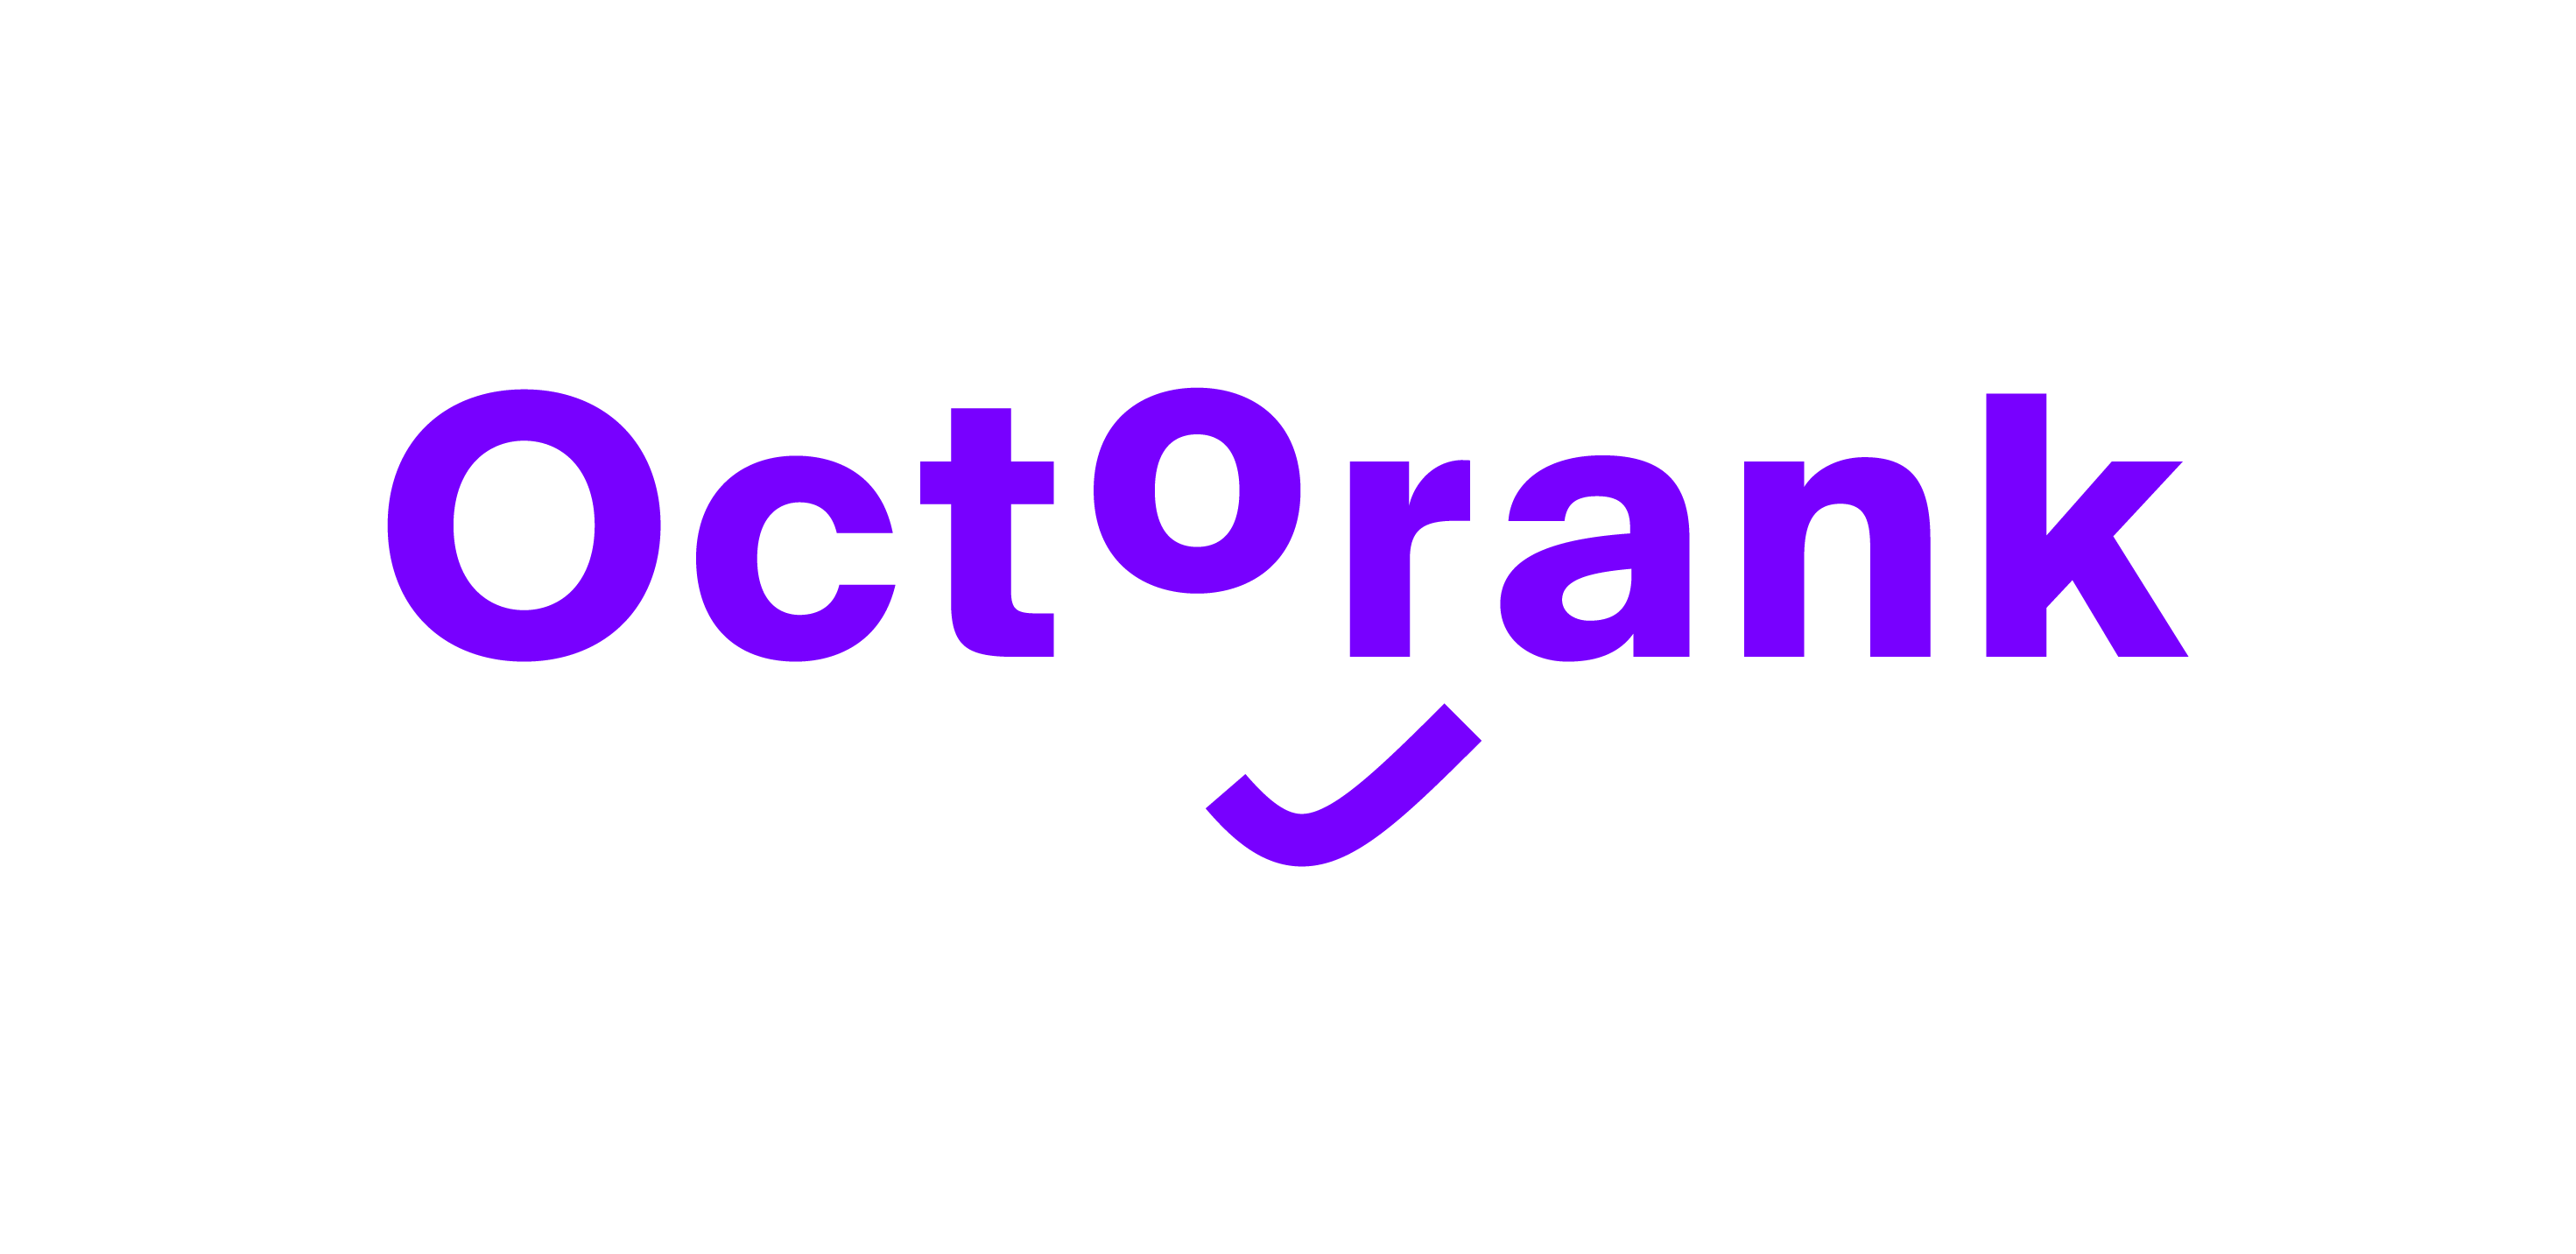 octorank logo rgb (8)